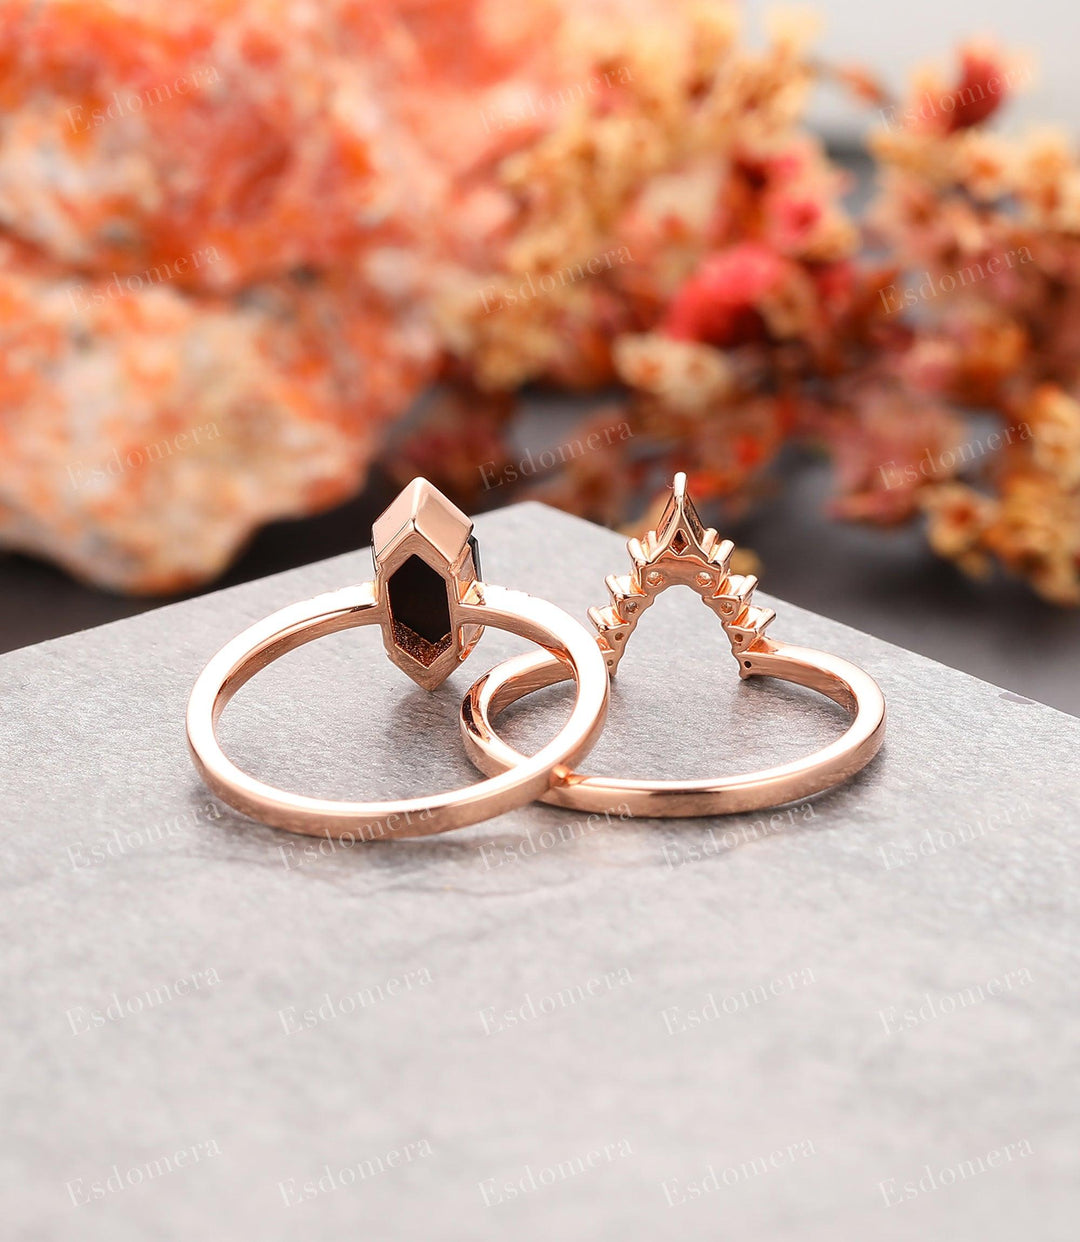 Long Hexagon Cut 5x9mm Black Onyx Engagement Ring Gemstone Bridal Set - Esdomera